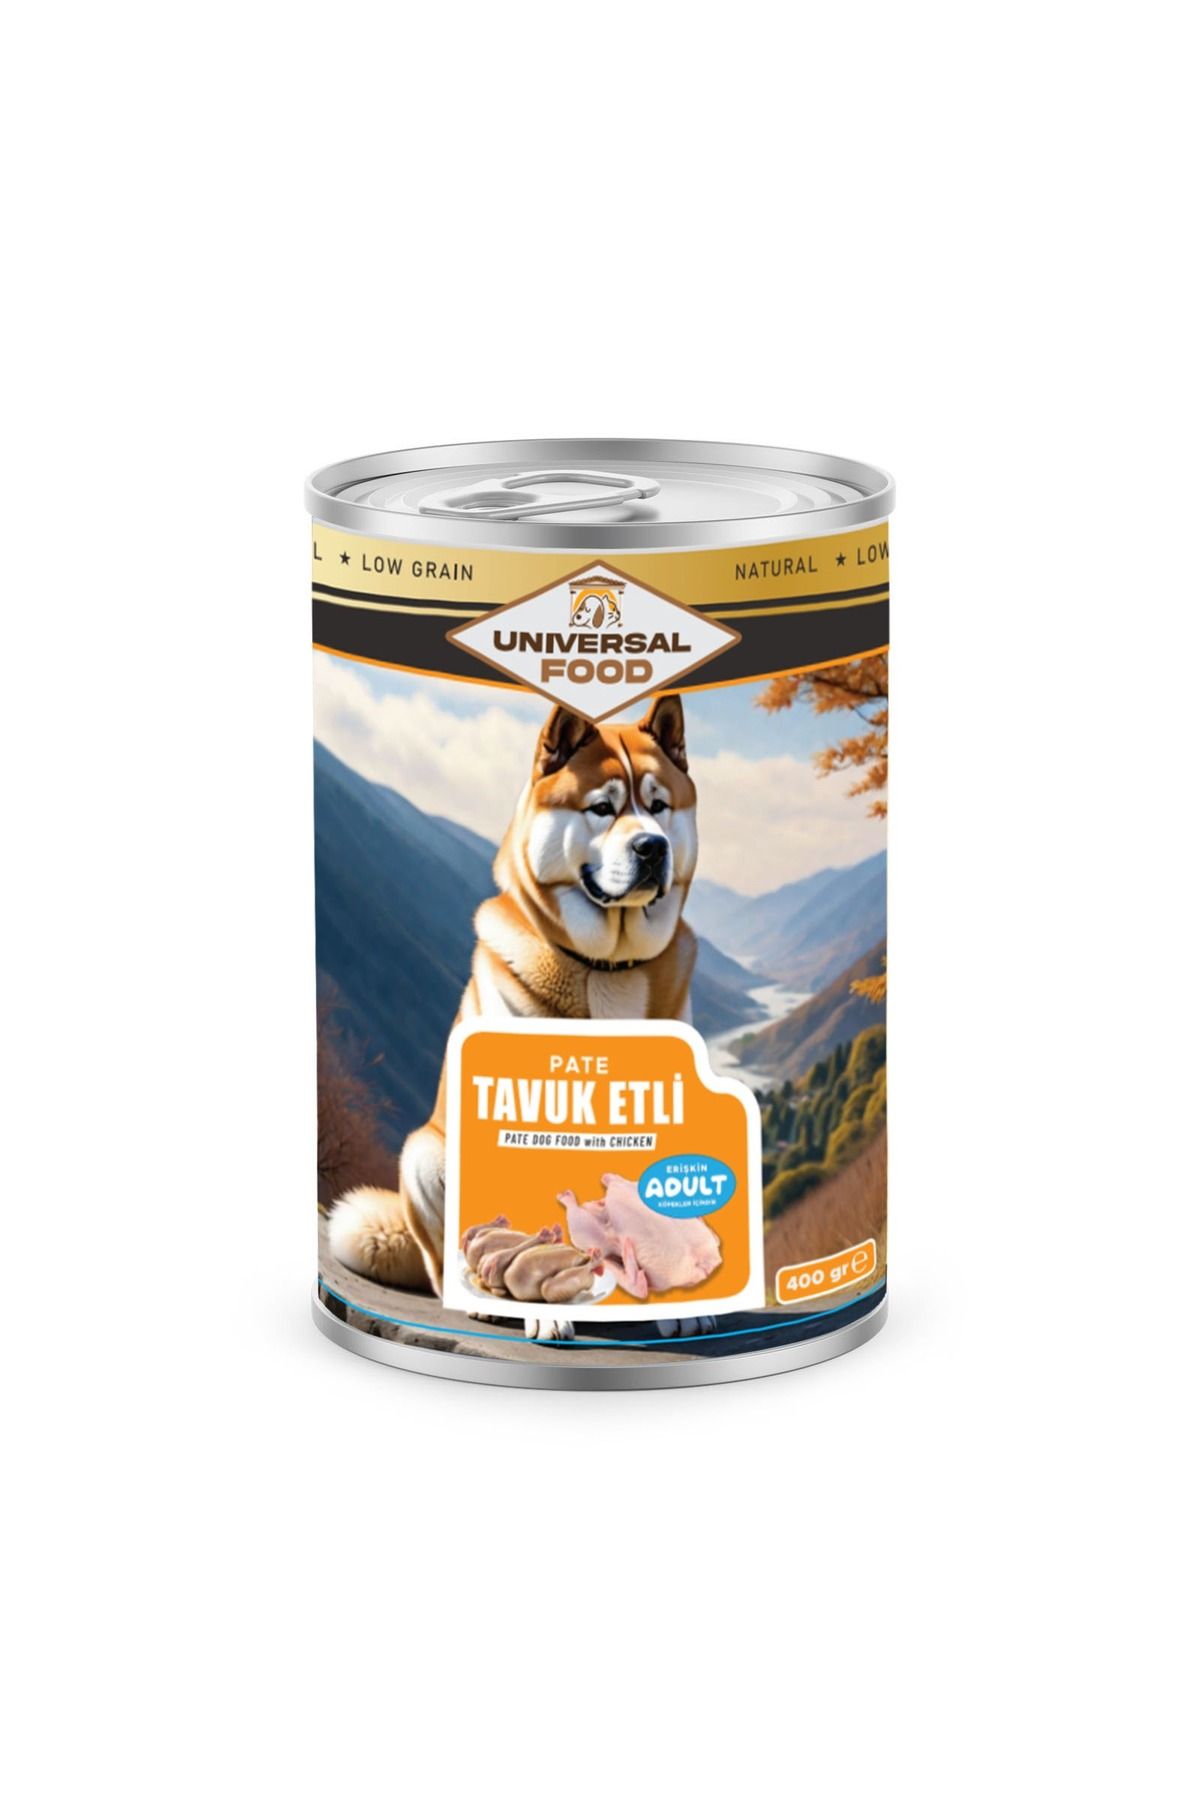 Universal Köpek Konservesi - Exquisite Pate Tavuk Etli Kedi Konserve 400g*20 Adet Fiyatı